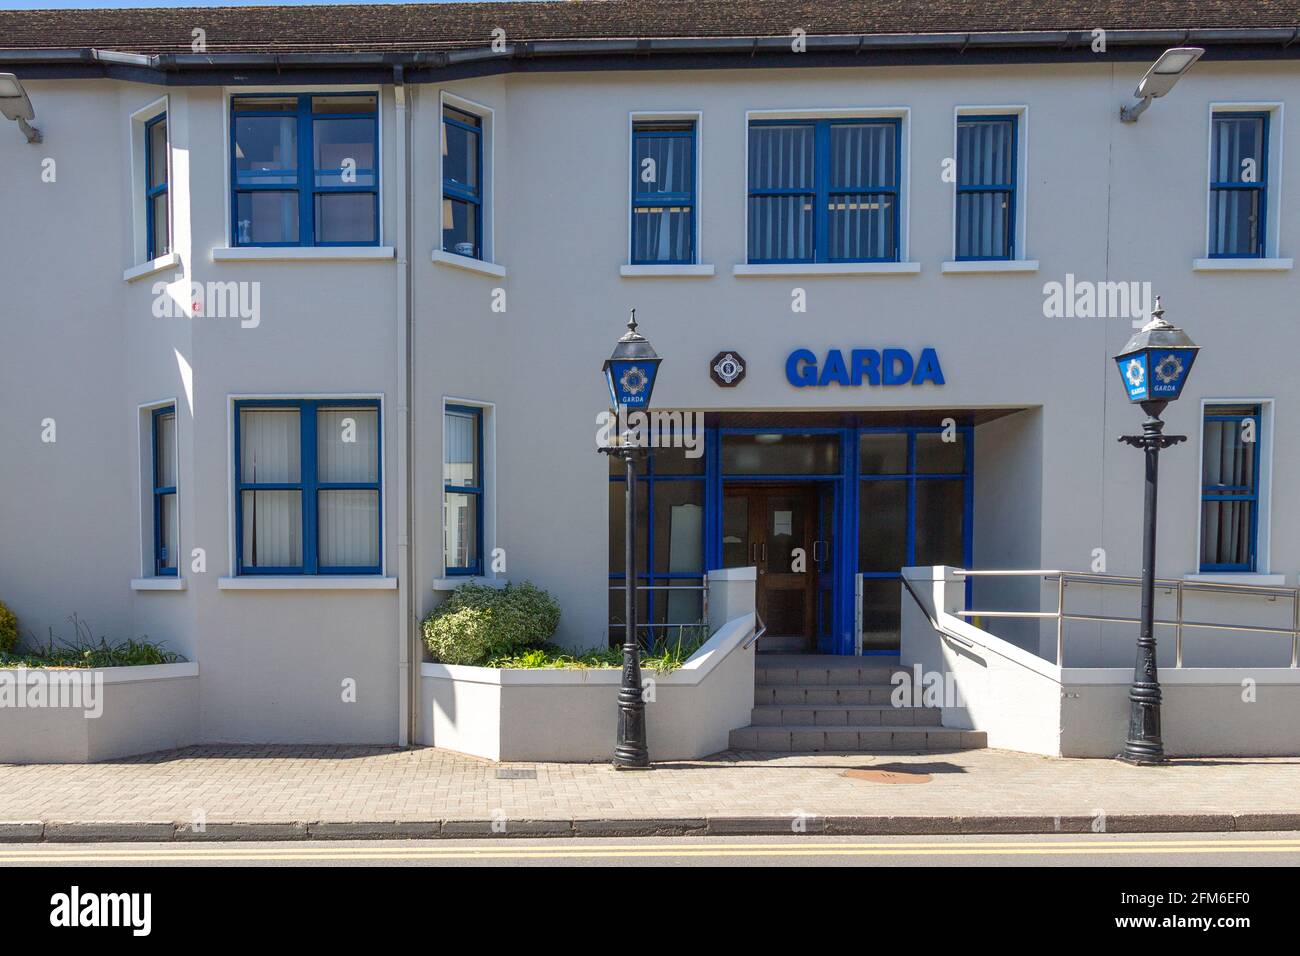 Front view Garda station Bandon West Cork Ireland Stock Photo